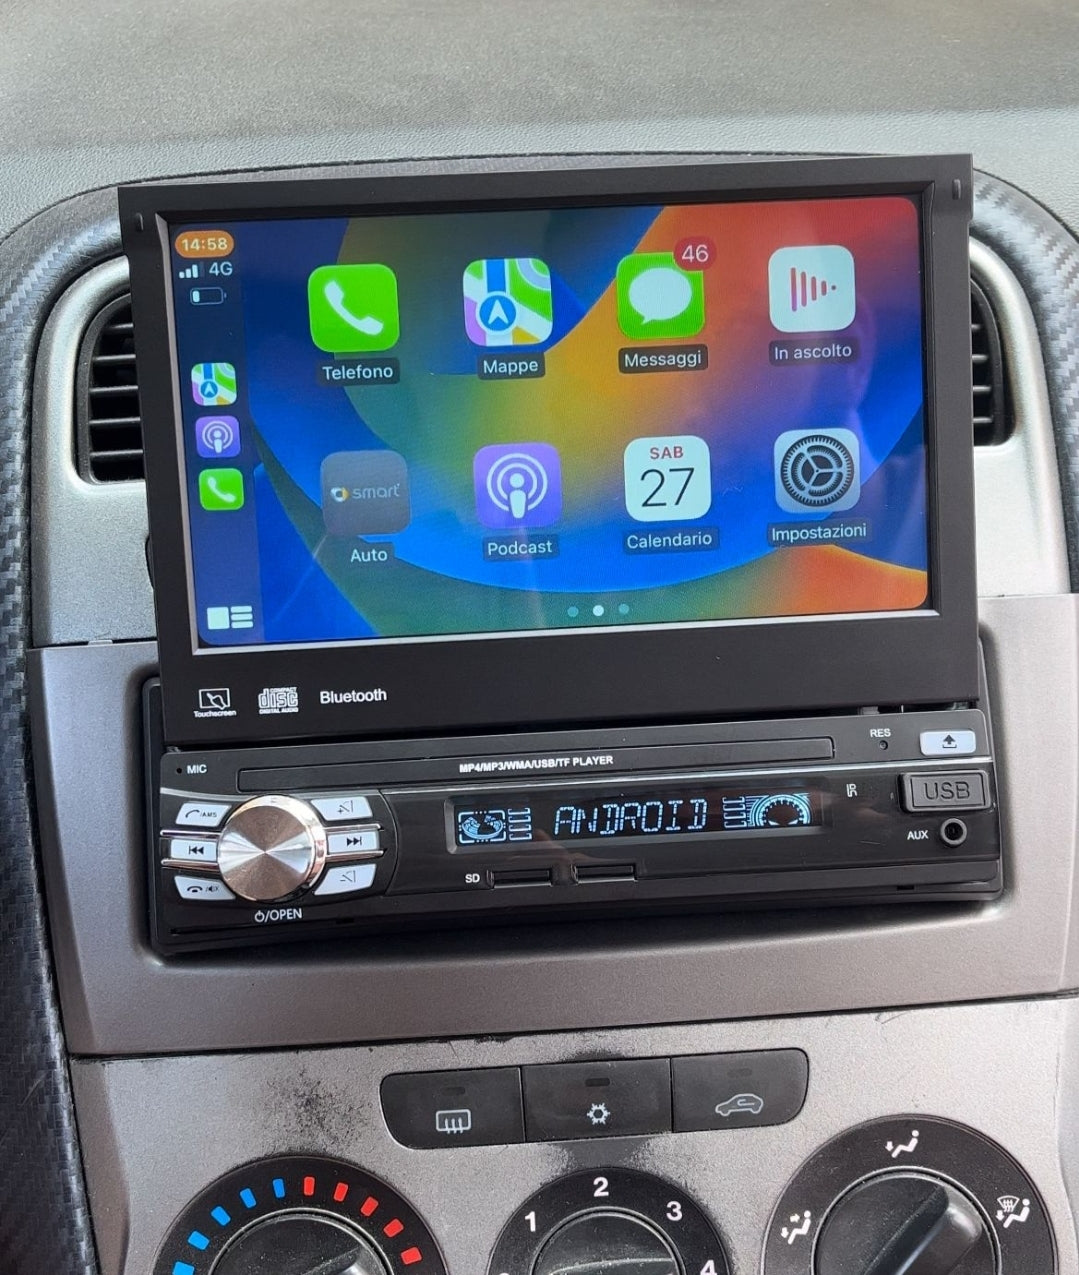 Autoradio Universale [MOTORIZZATO] - Android, 1Din 7"Pollici, Android, GPS, WiFi, Radio, Bluetooth, FM, SWC, PlayStore.